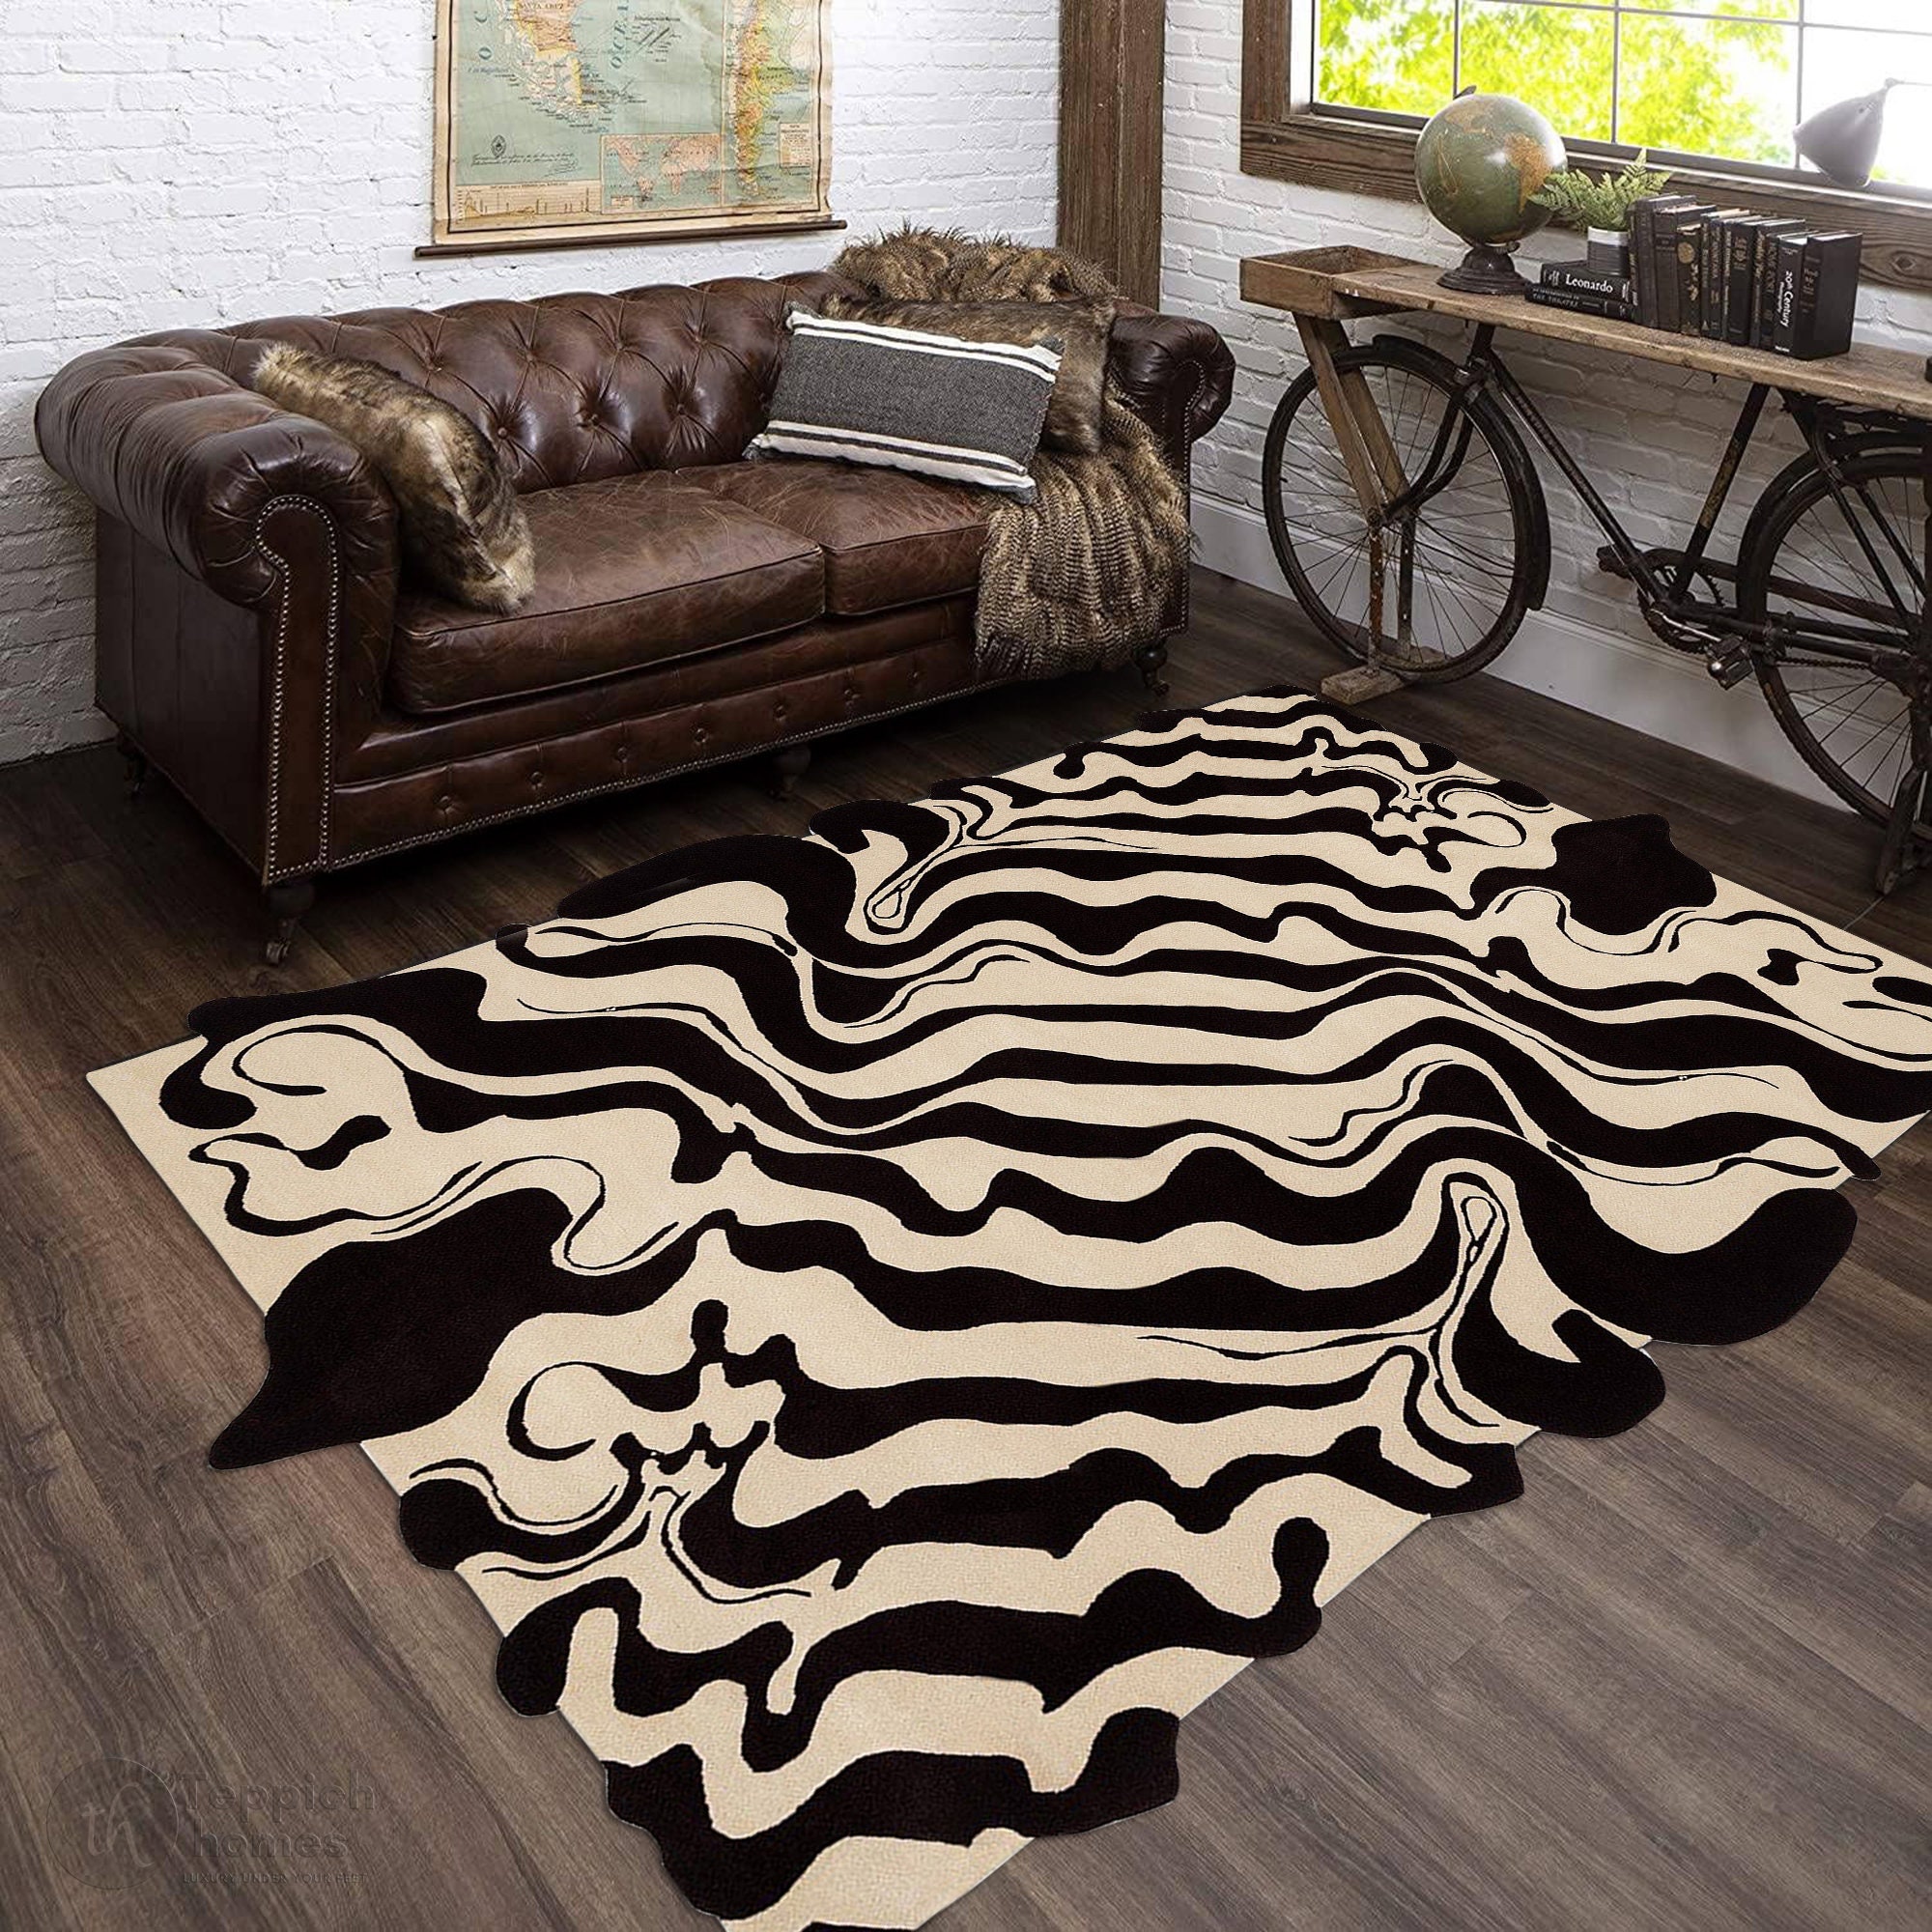 Hand Tufted, Wool Area Rug, Black, White Color, Rugs, 5x7, 5x8, 6x8, 6x9,  7x10, Living Room Rugs, Bedroom, Custom Carpet 